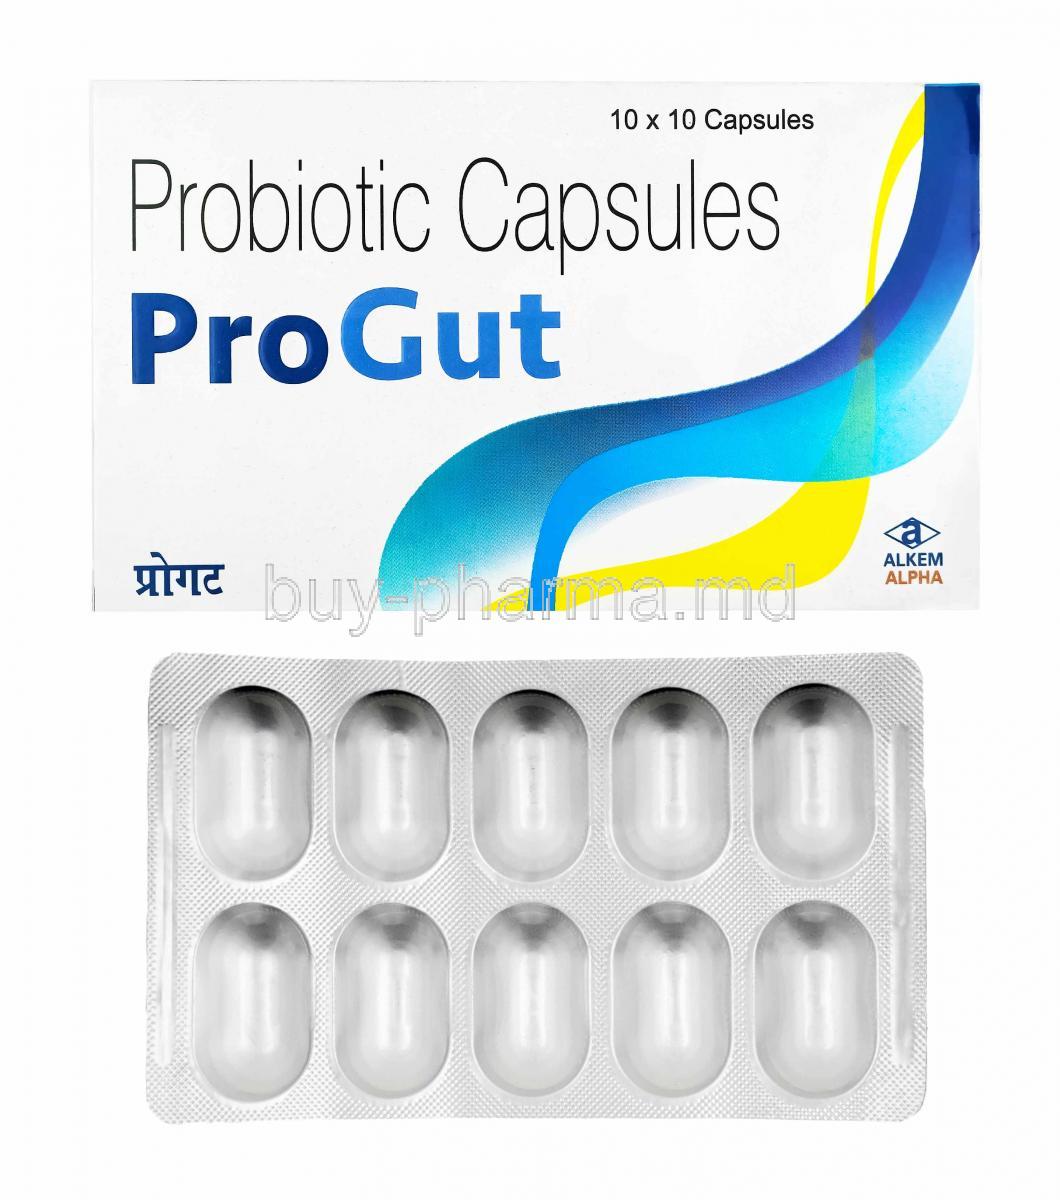 Progut, box and capsules